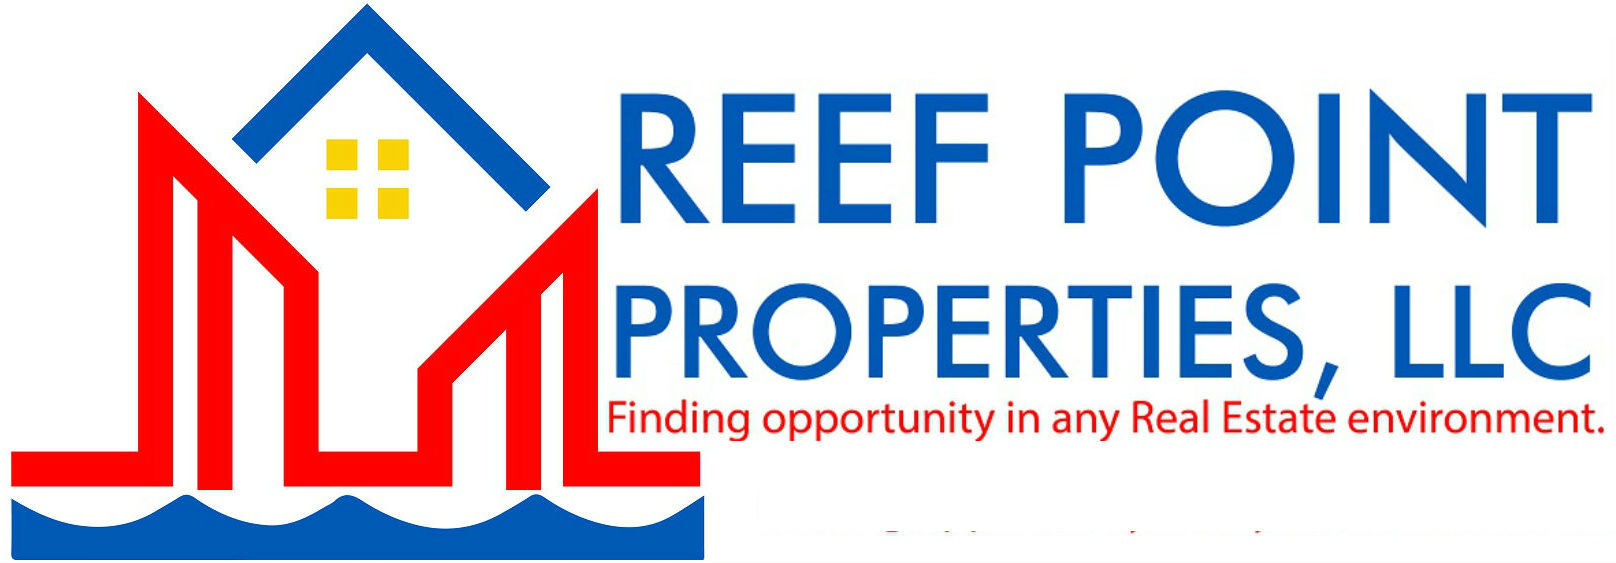 Reef Point Properties, LLC